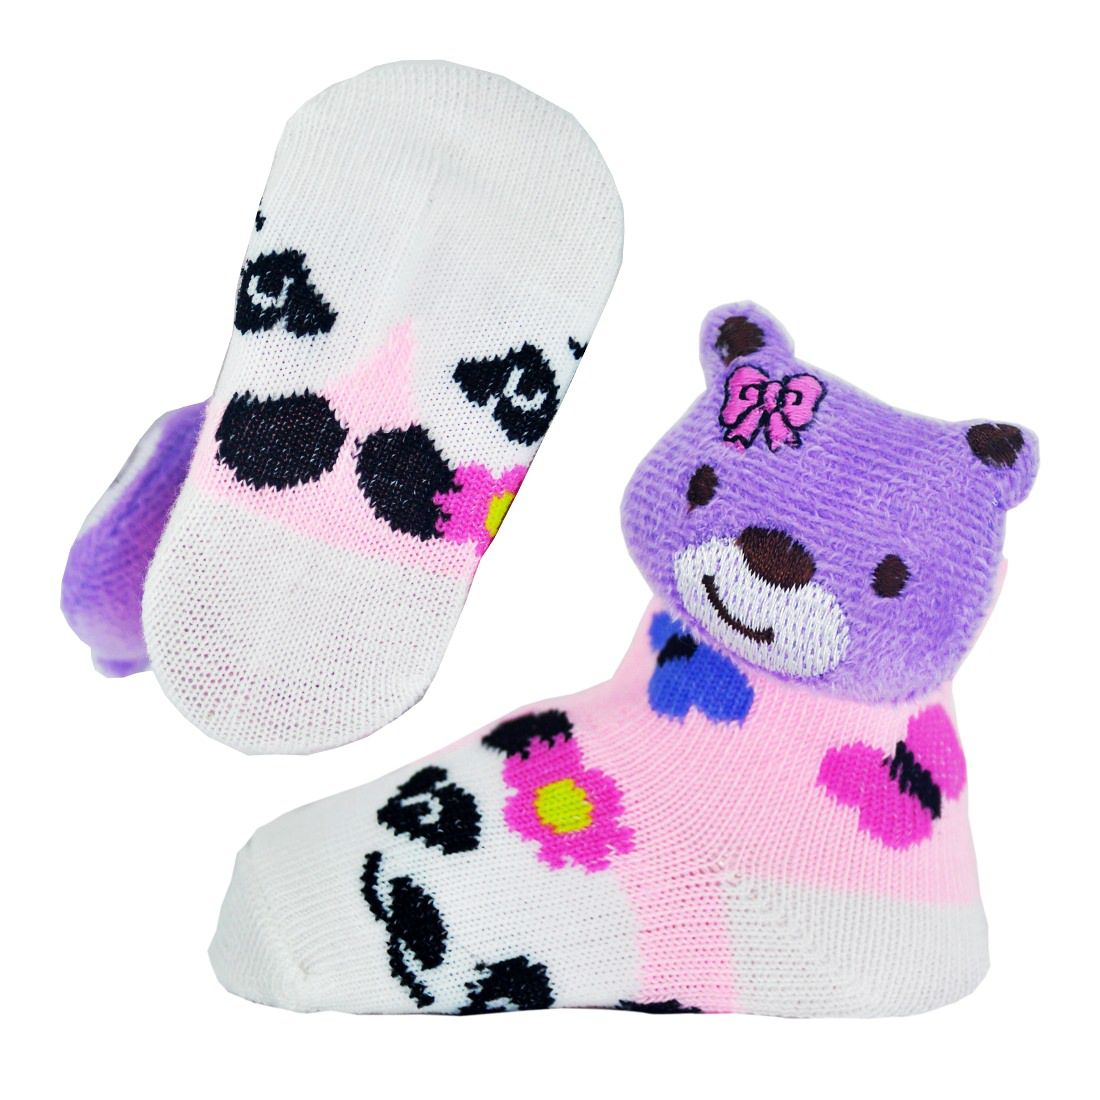 NewBorn Baby Fancy Socks Combo 2 Pair: Buy Online at Low Price in India ...